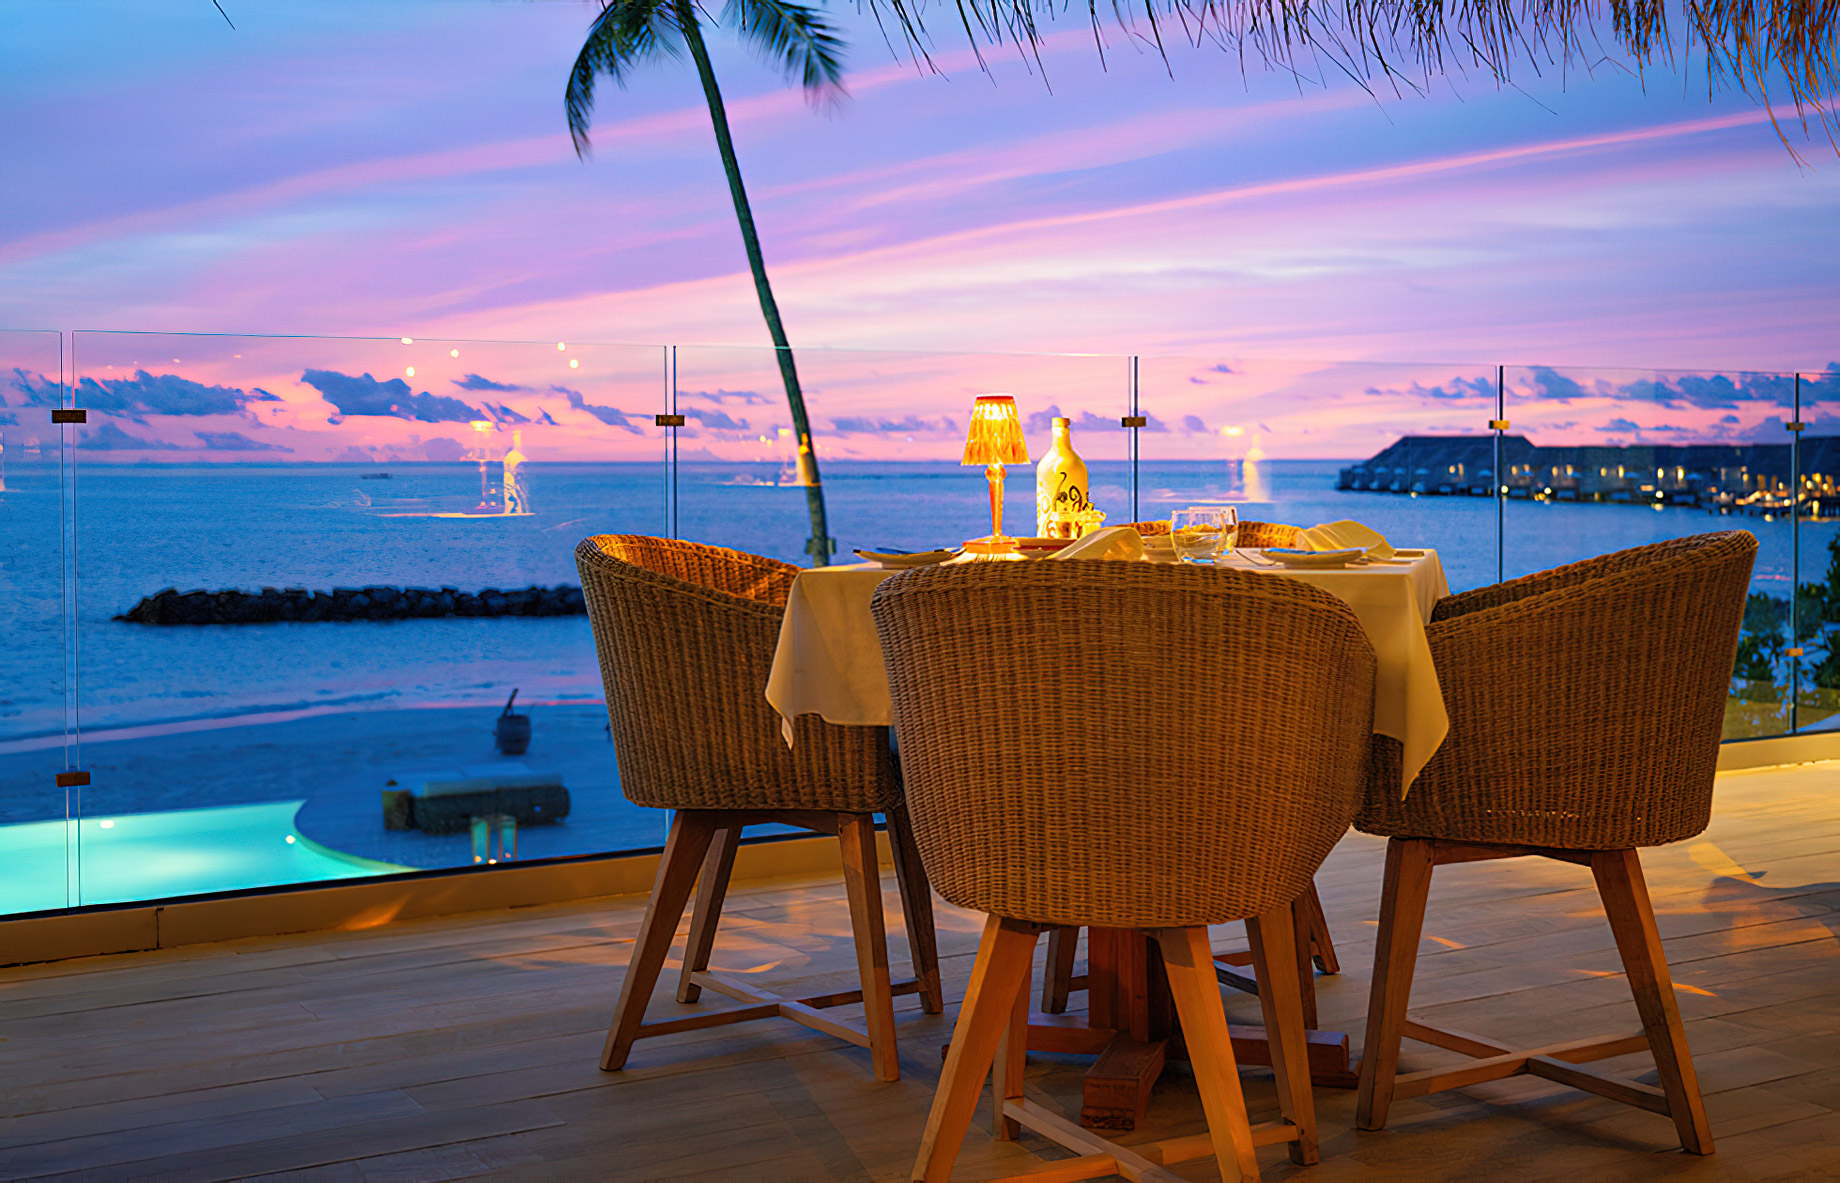 Baglioni Resort Maldives – Maagau Island, Rinbudhoo, Maldives – Ocean View Dining Sunset